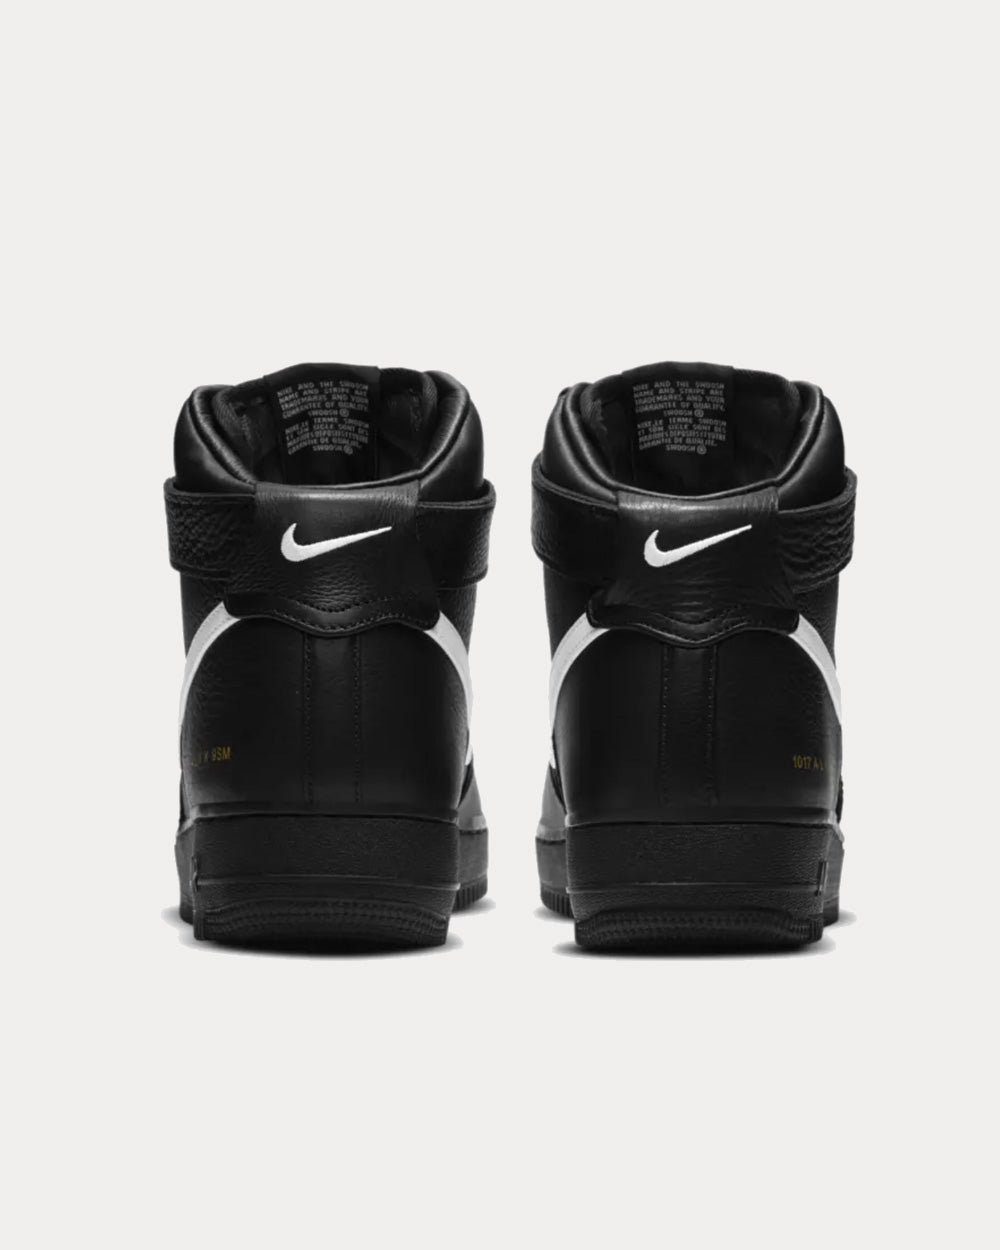 Nike x ALYX - Air Force 1 Black & White High Top Sneakers